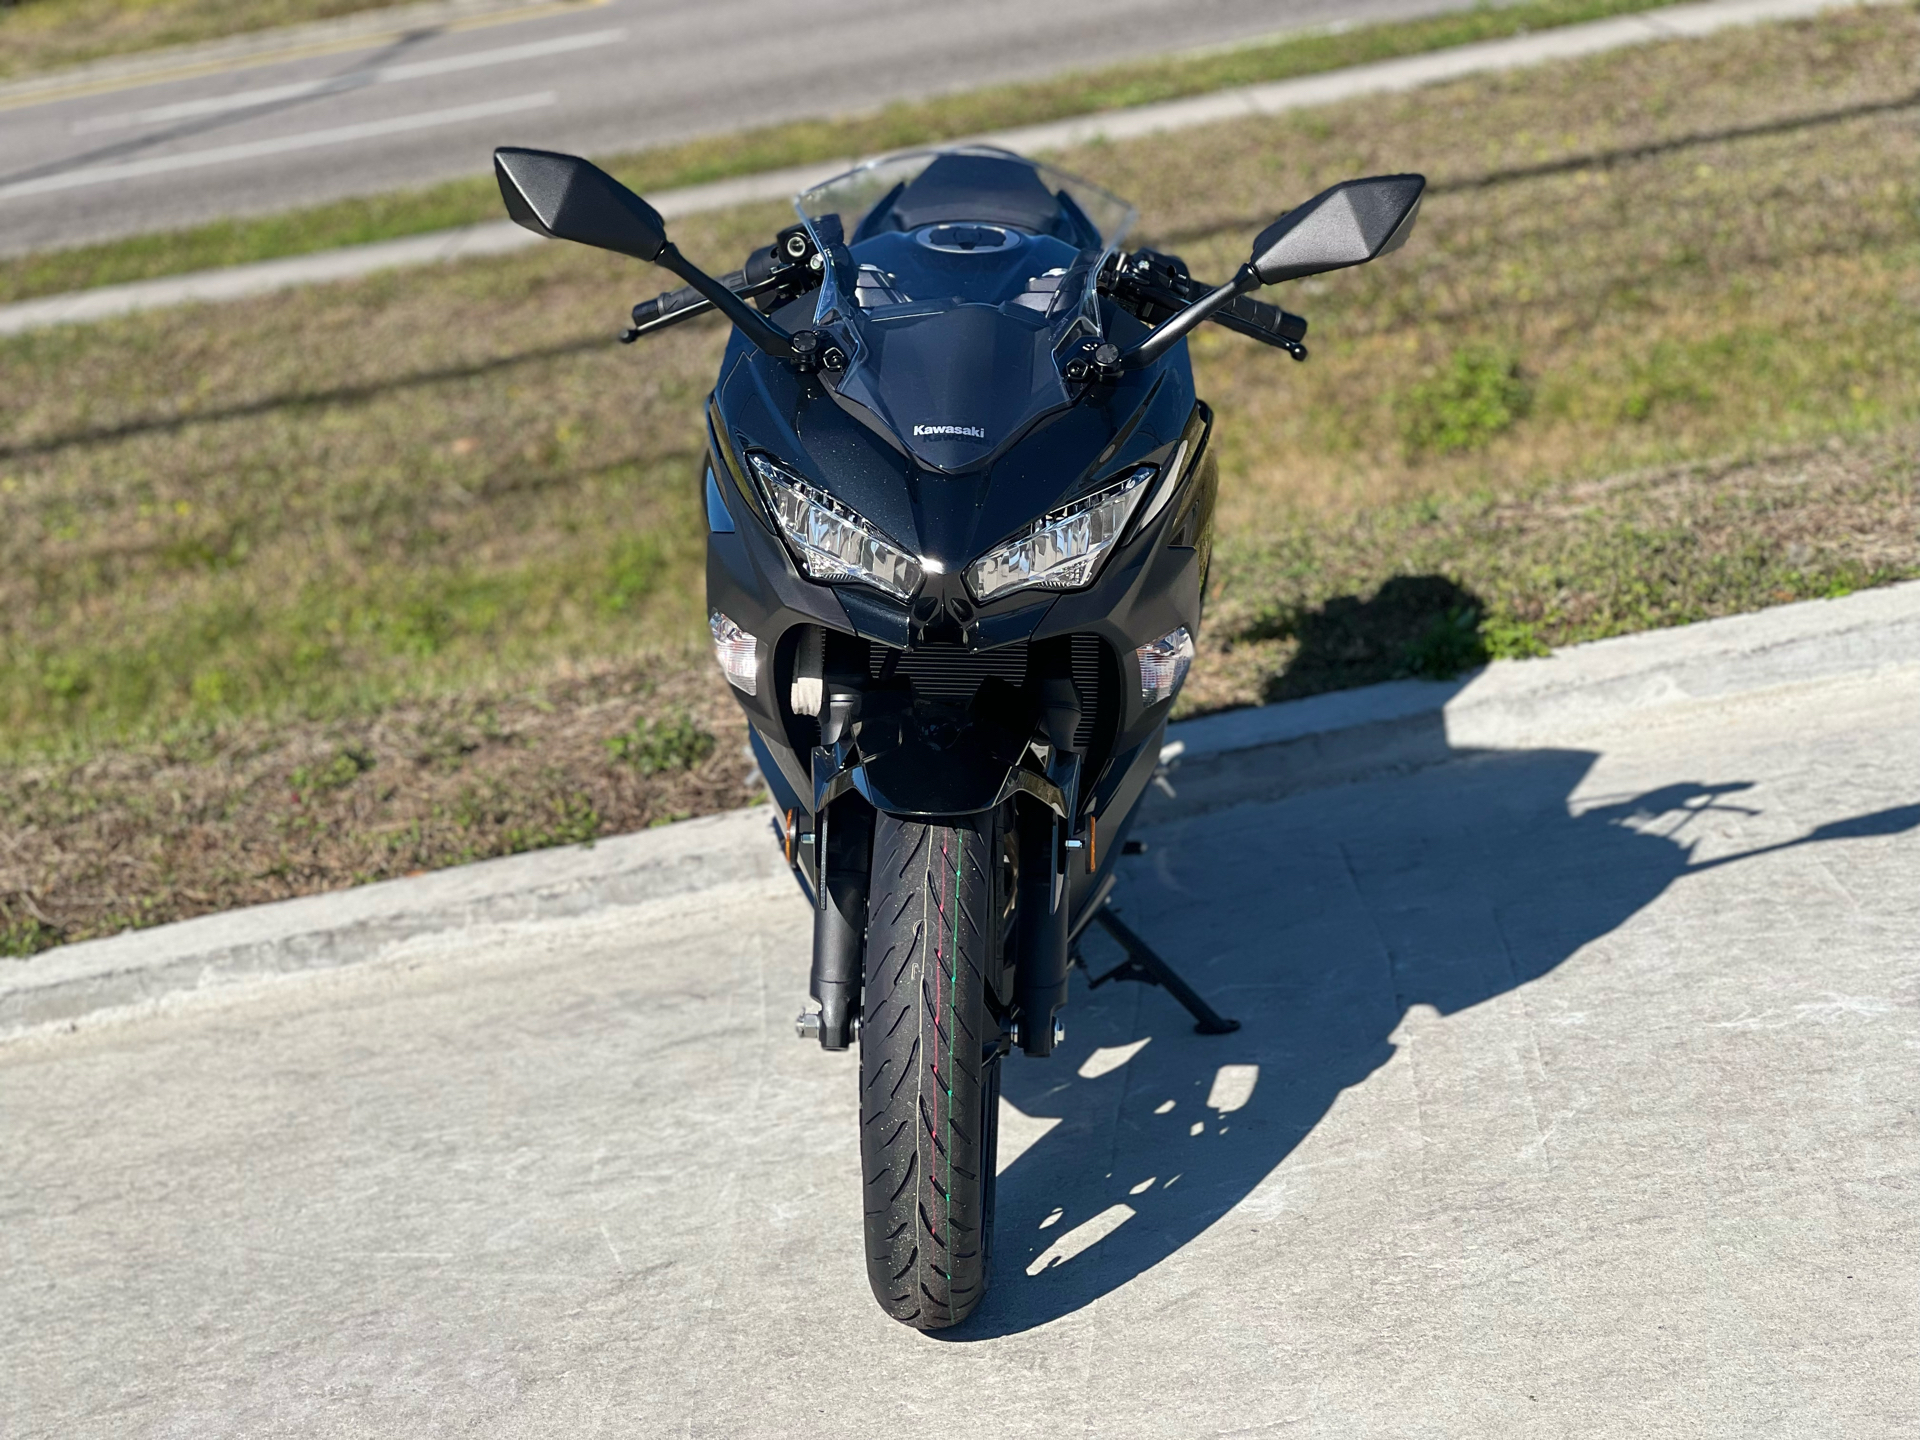 2023 Kawasaki Ninja 400 in Orlando, Florida - Photo 5